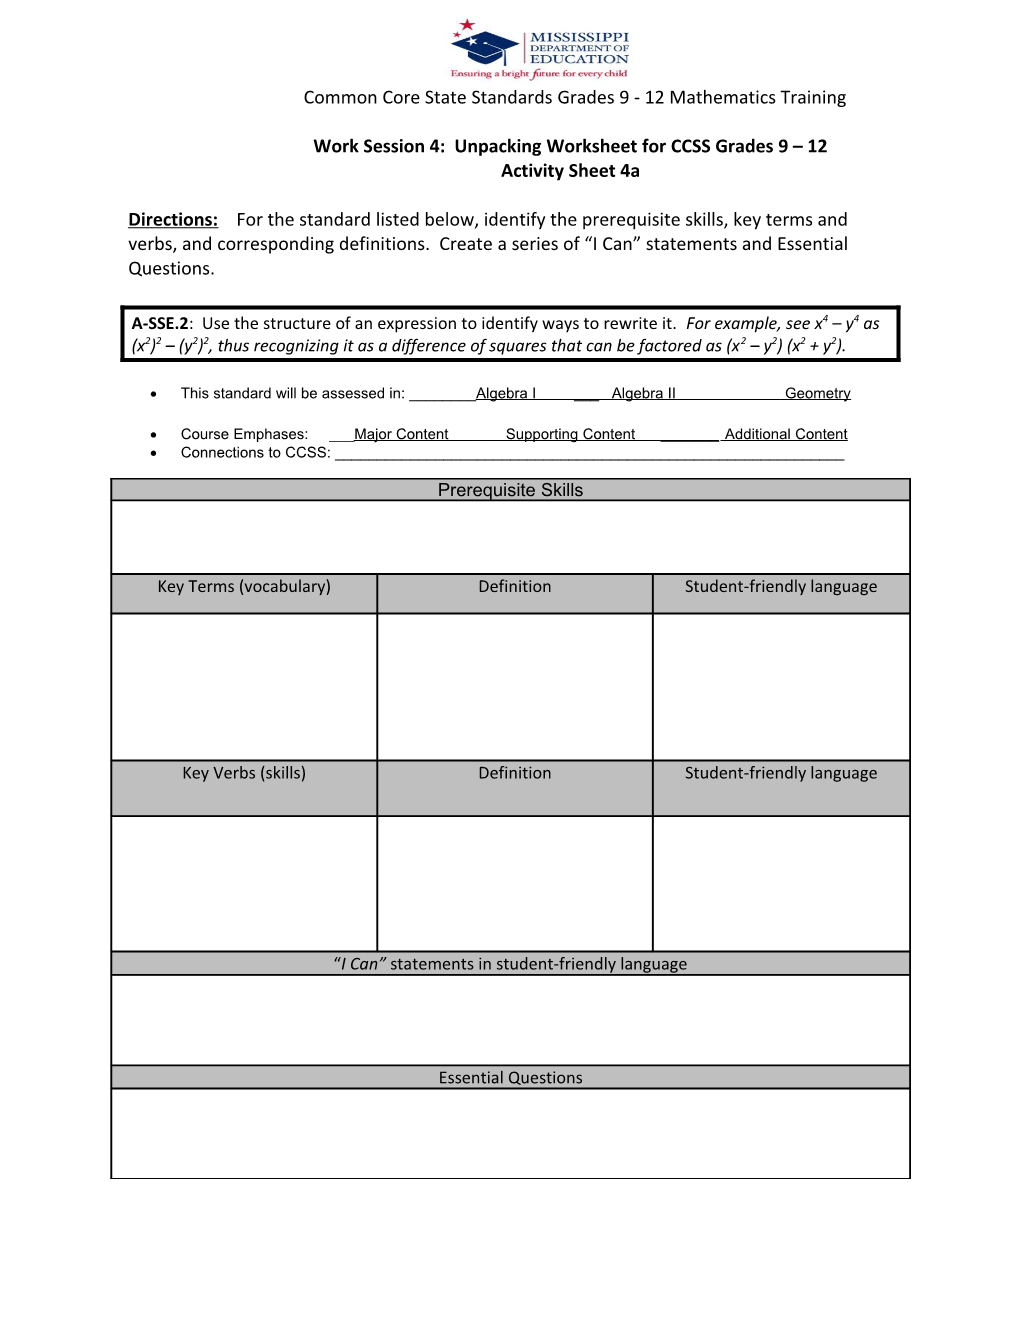 Work Session 4: Unpacking Worksheet for CCSS Grades 9 12